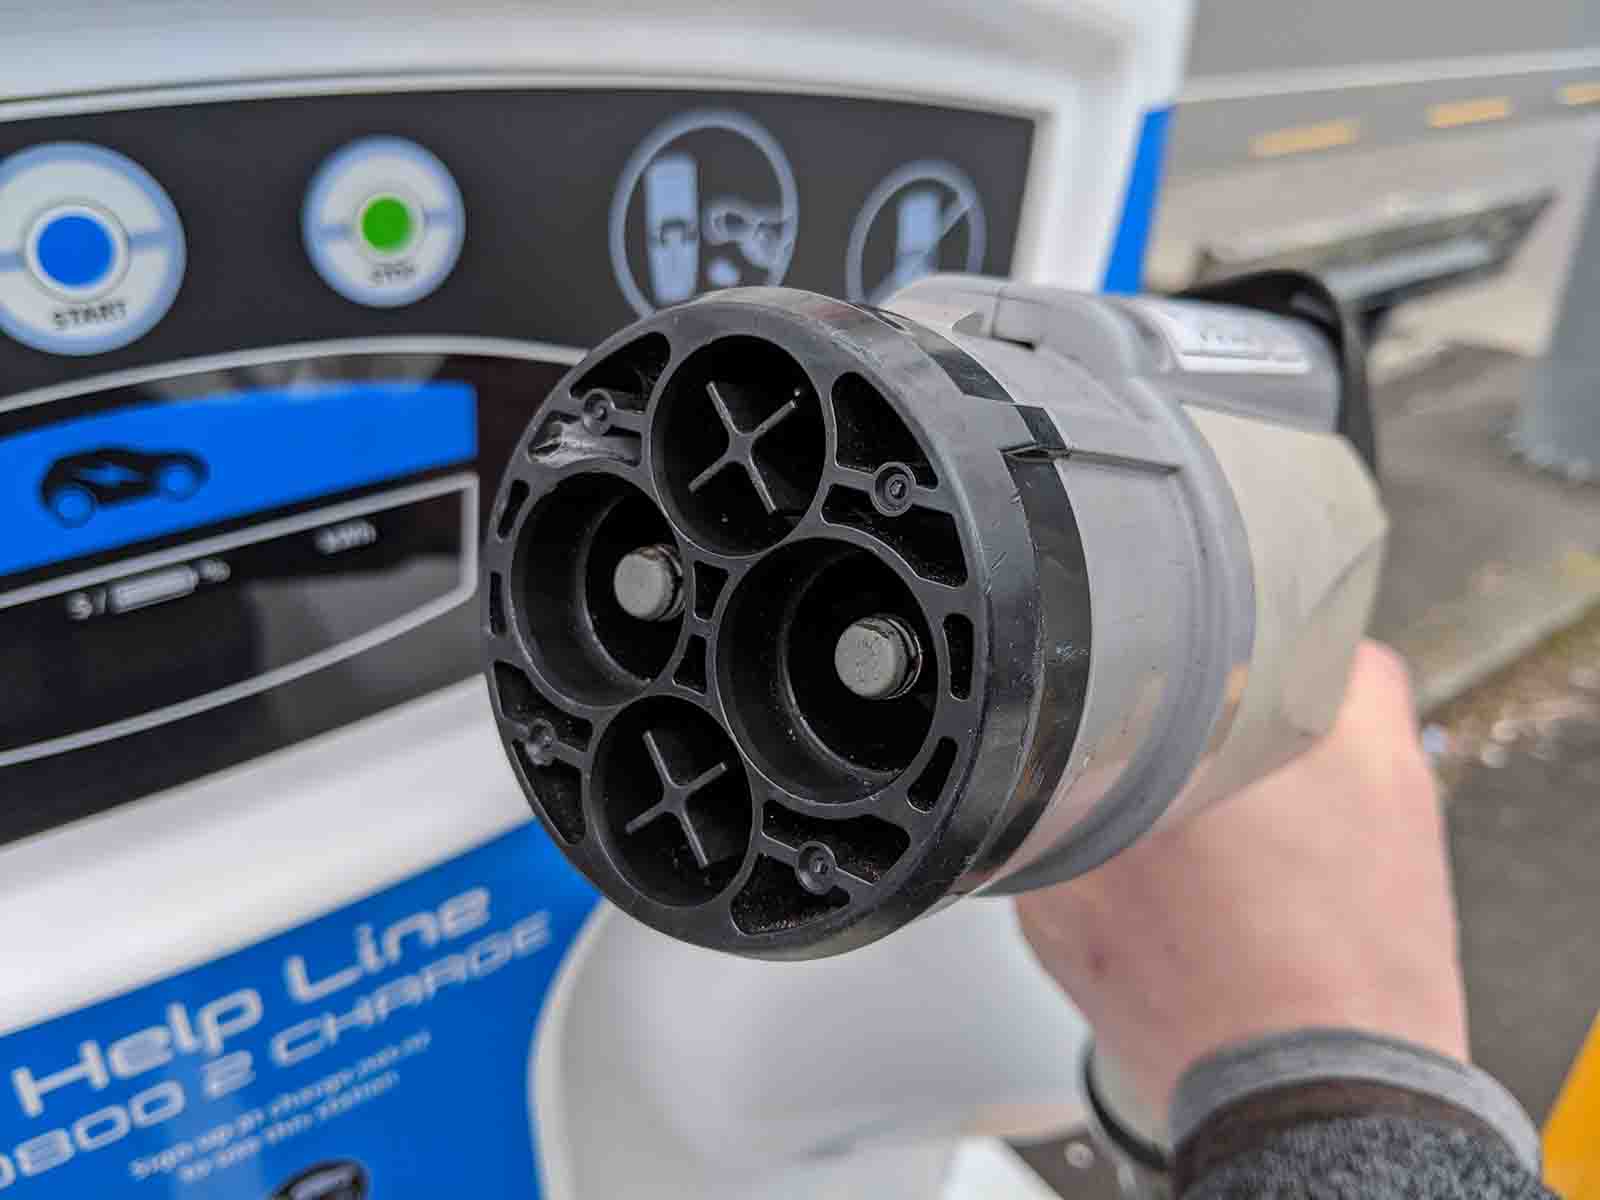 Raumati electric vehicle charging chademo connector